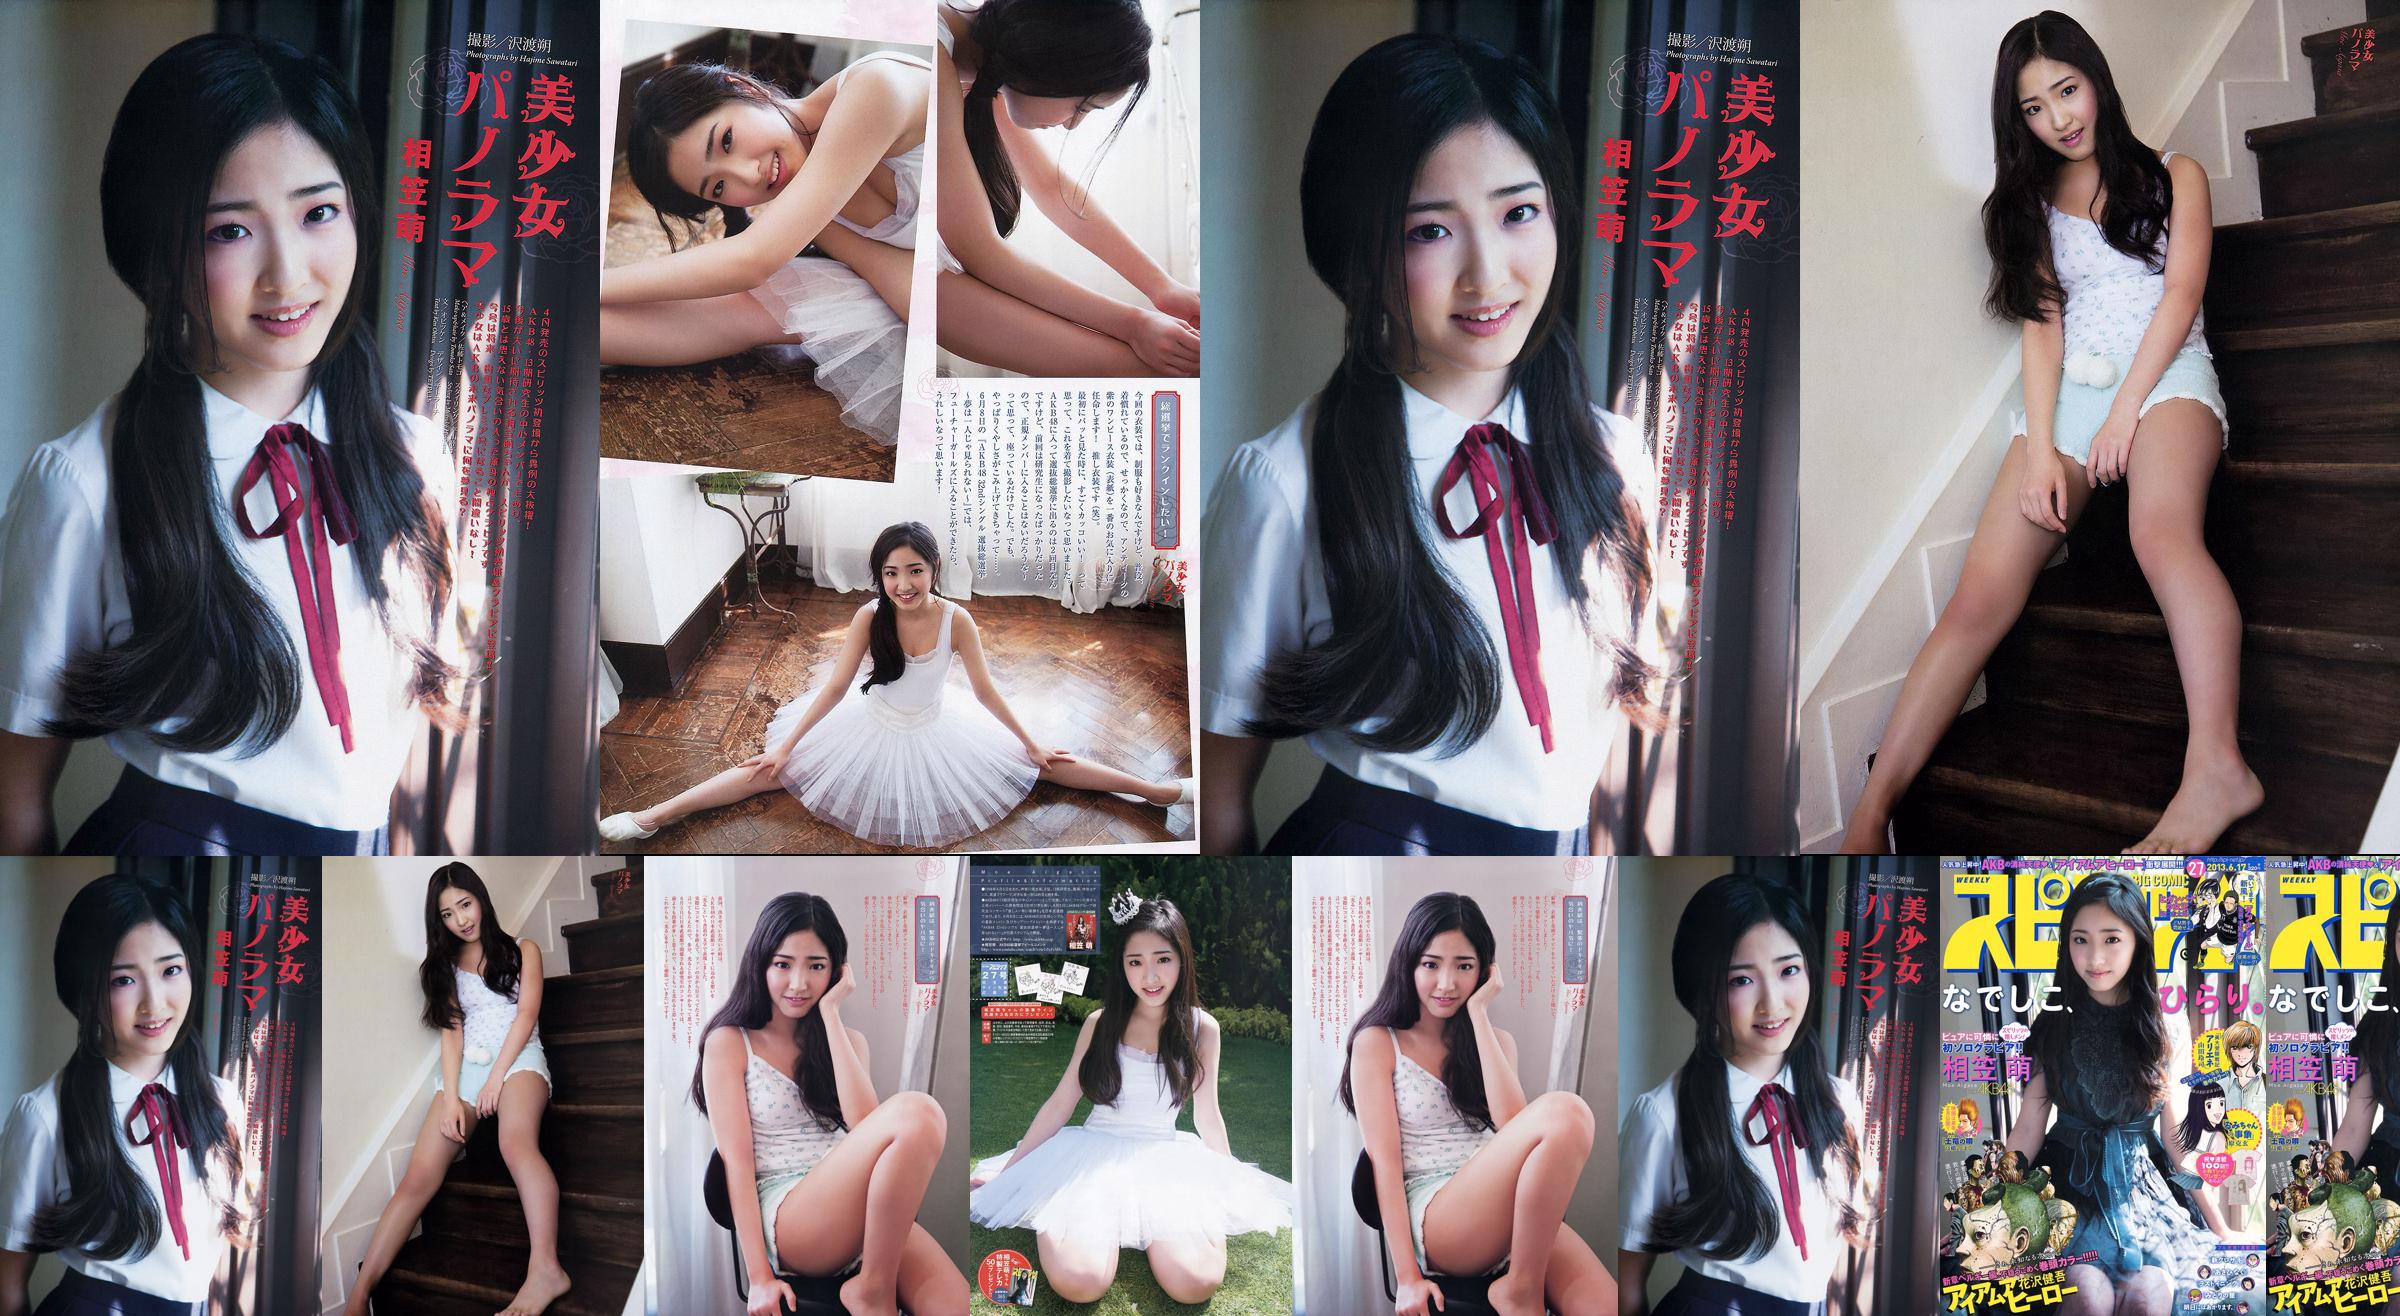 [Wöchentliche große Comic-Geister] Aikasa Moe 2013 No.27 Photo Magazine No.15c5b5 Seite 1